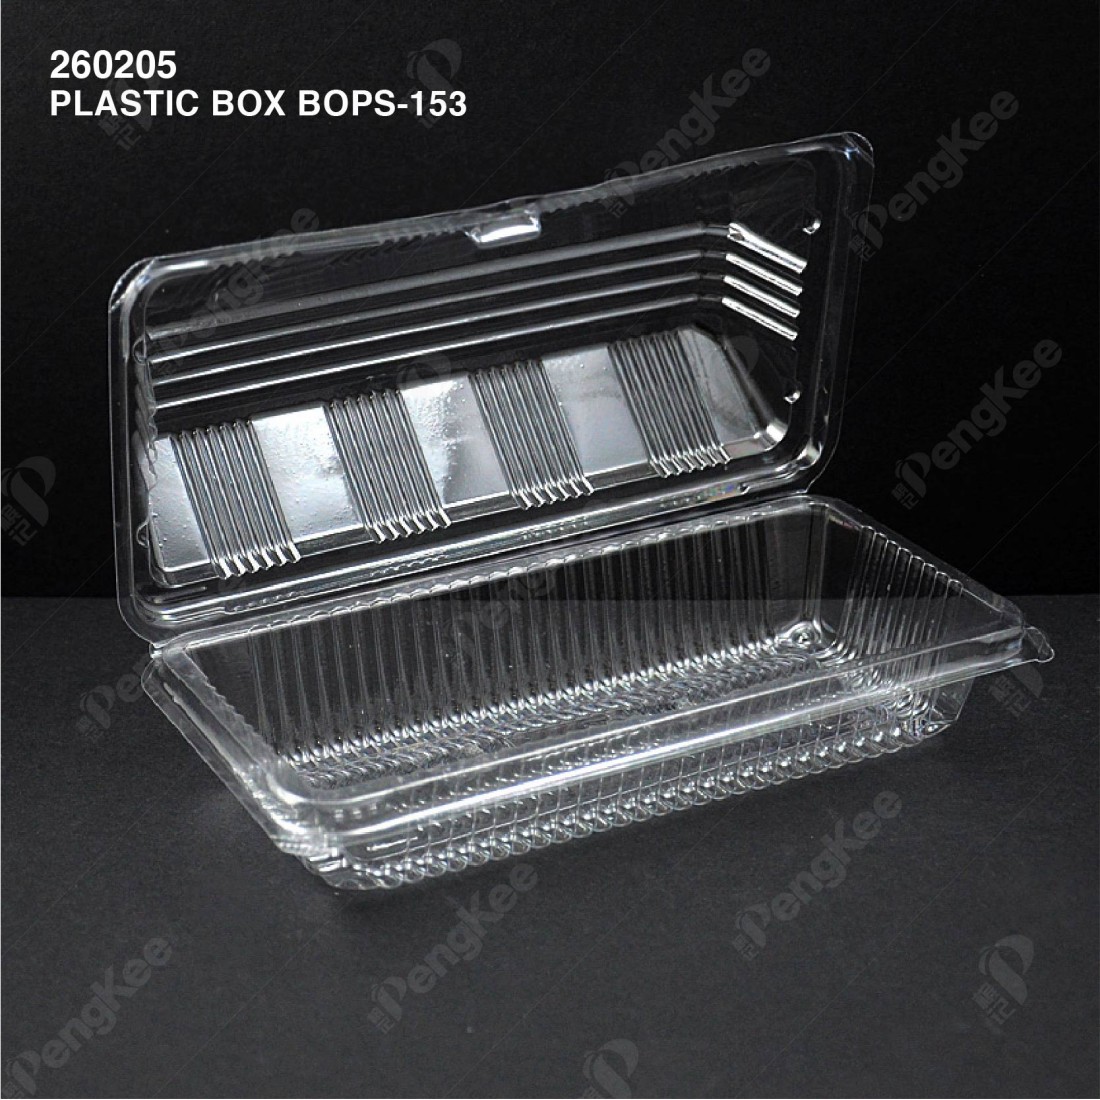 PLASTIC BOX BOPS-153-C20 (1 HOT DOG WITH LOCK) (100'S) 